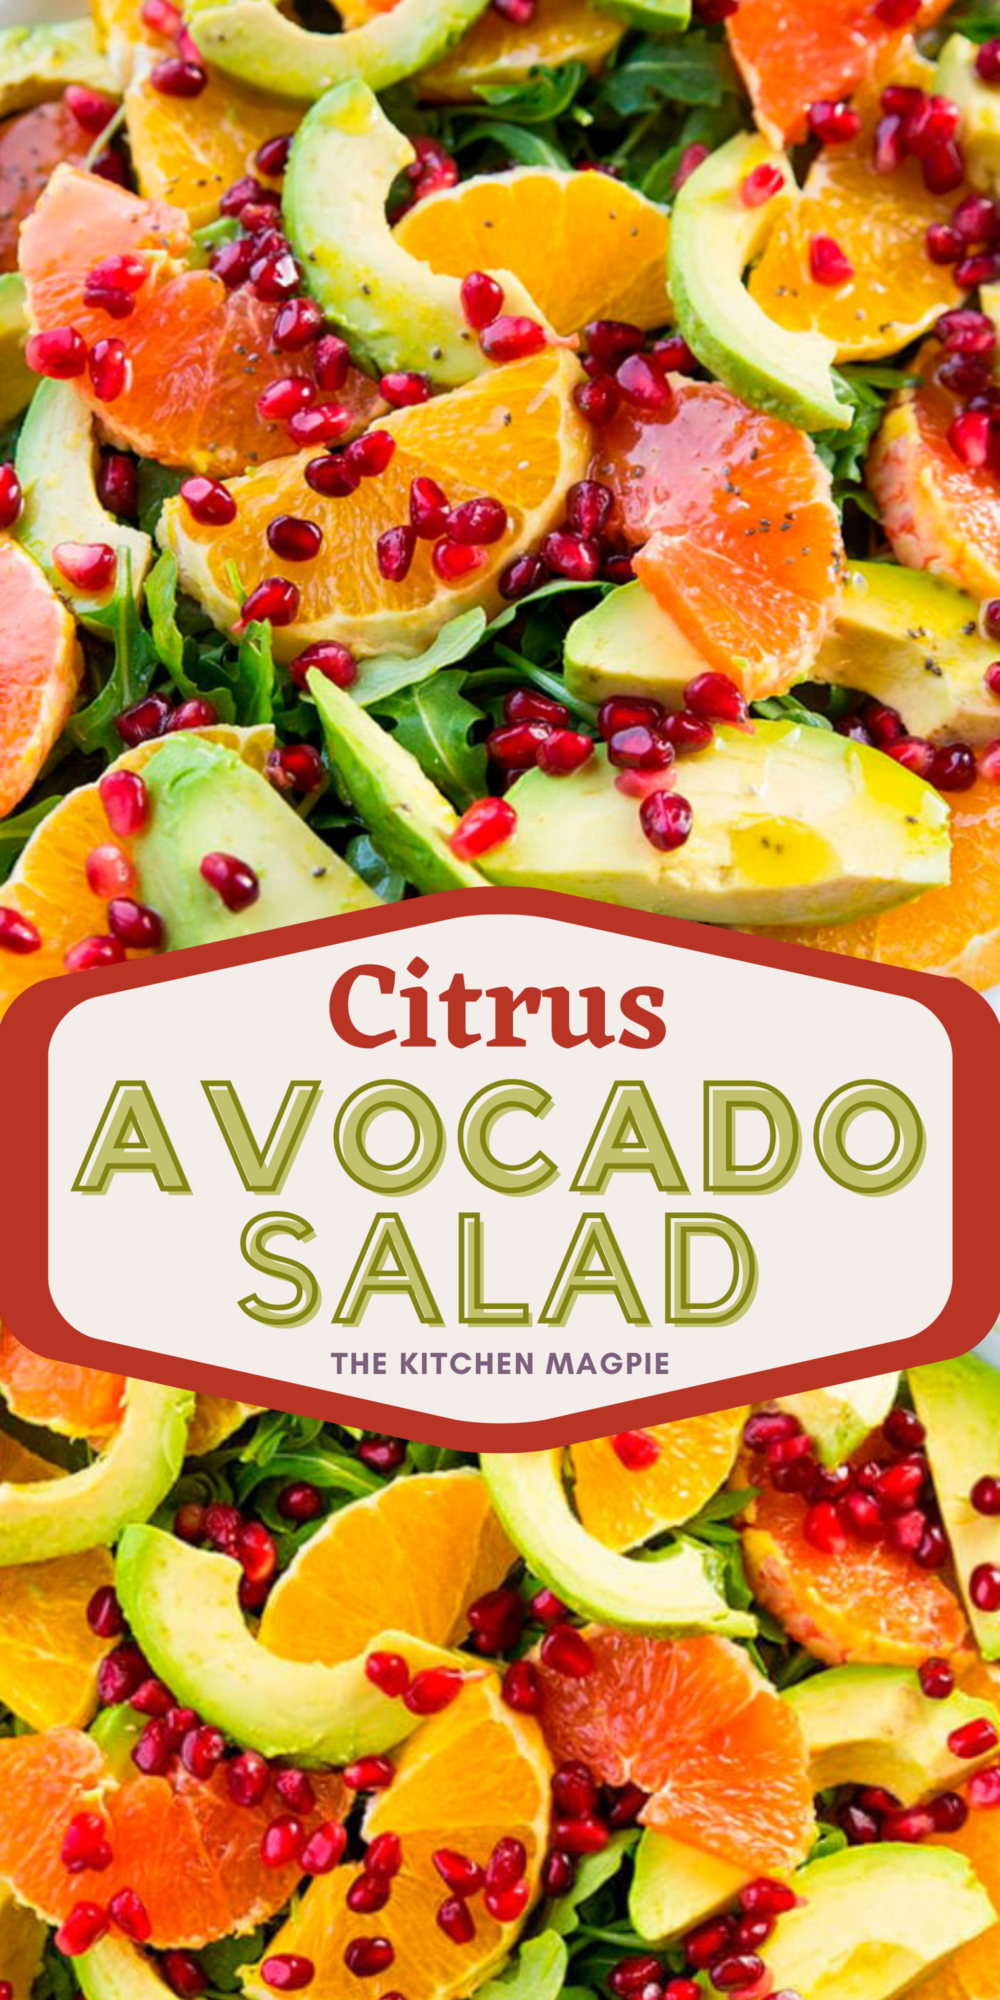 Winter Citrus Avocado Salad - citrus, avocado, pomegranate, and arugula make for a healthy and affordable salad.